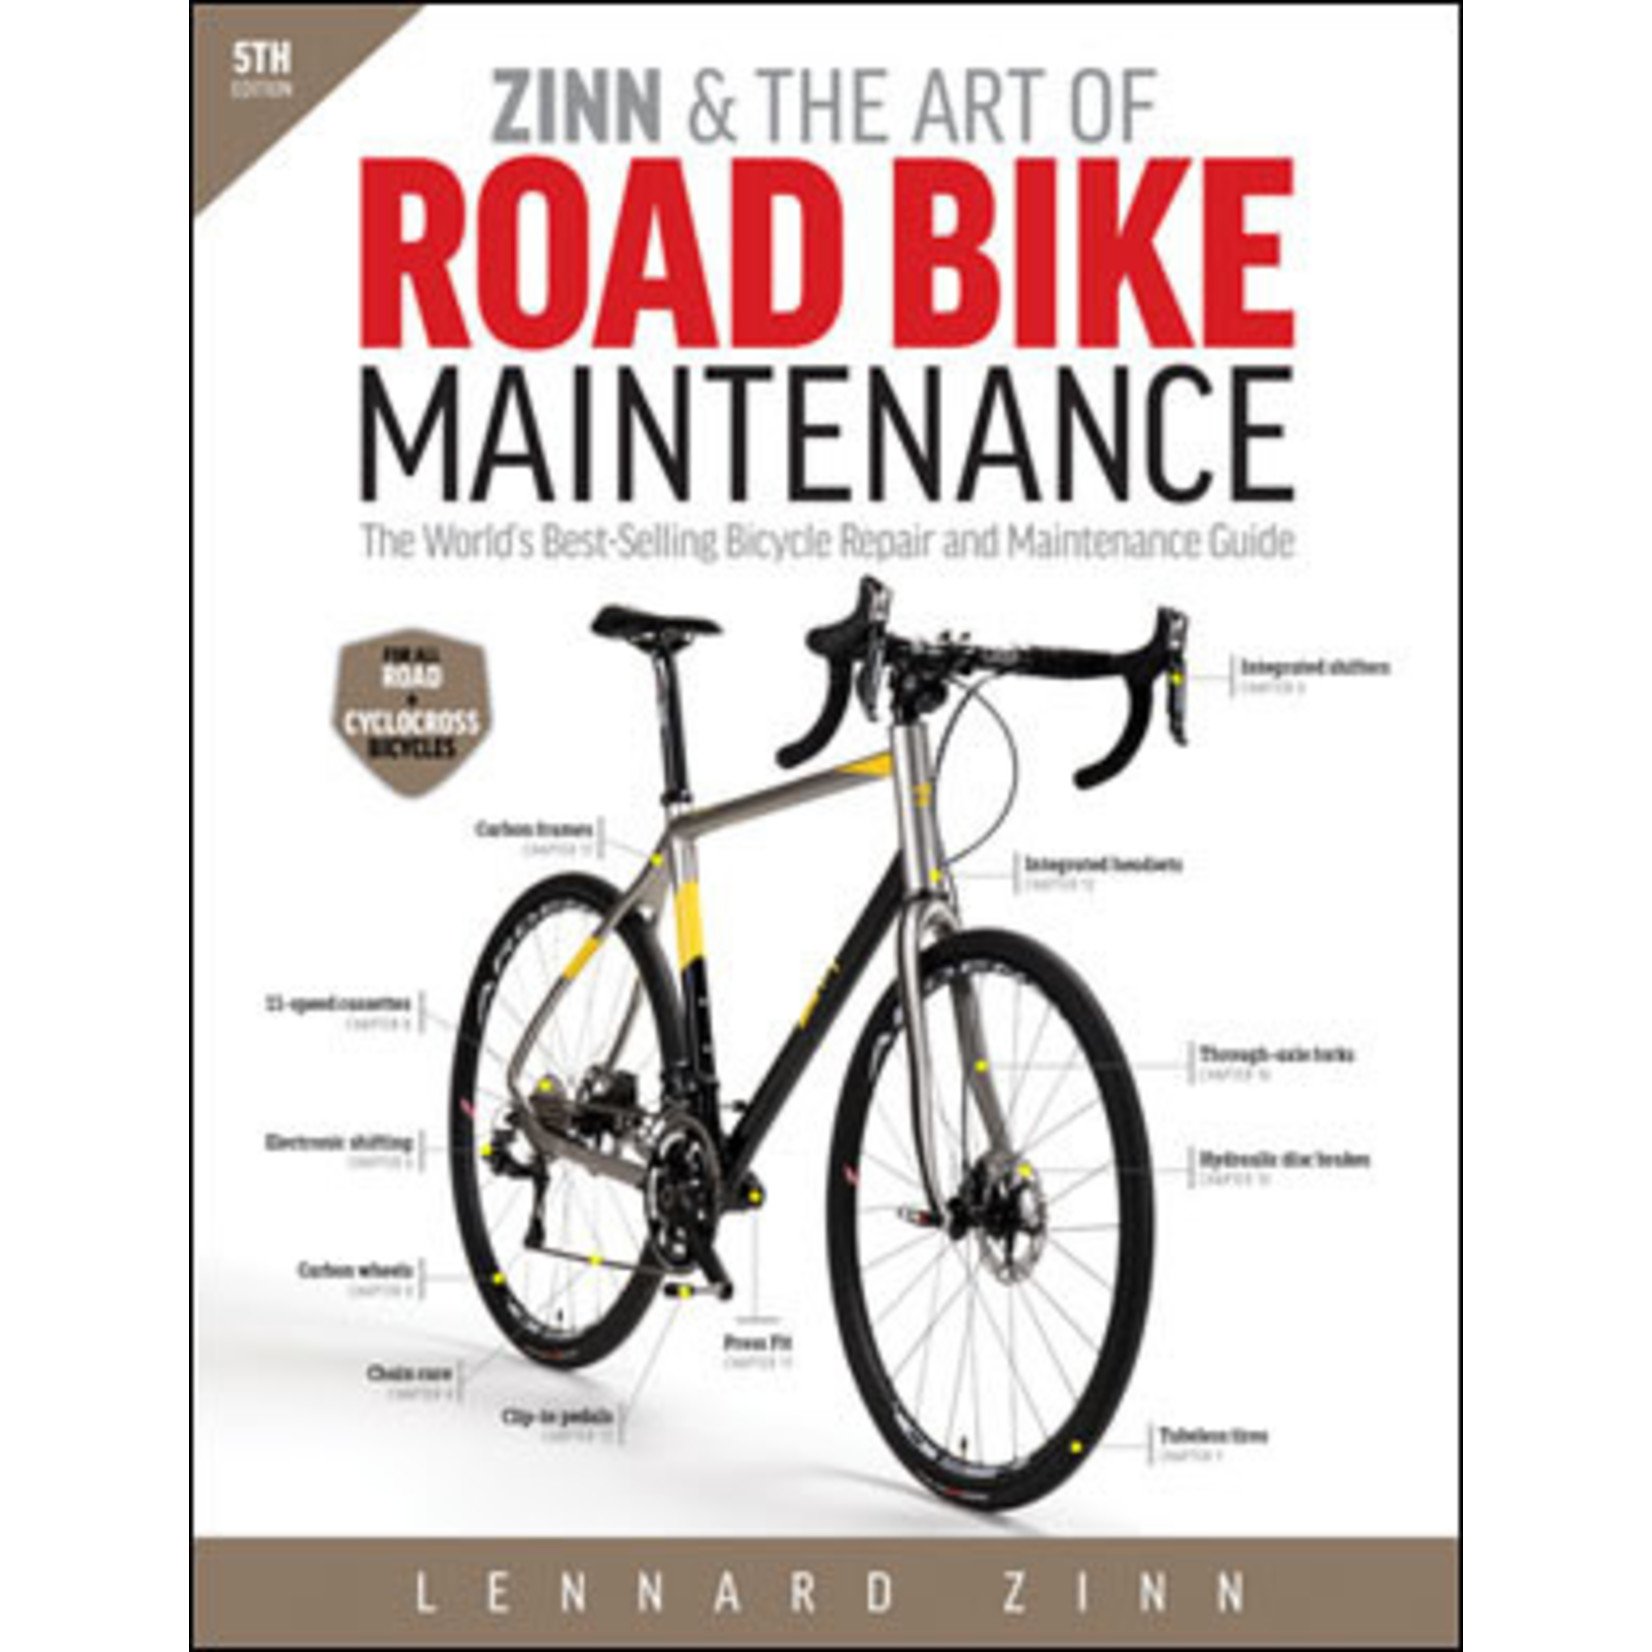 Zinn & The Art of Road Bike Maintenance, 5th Edition